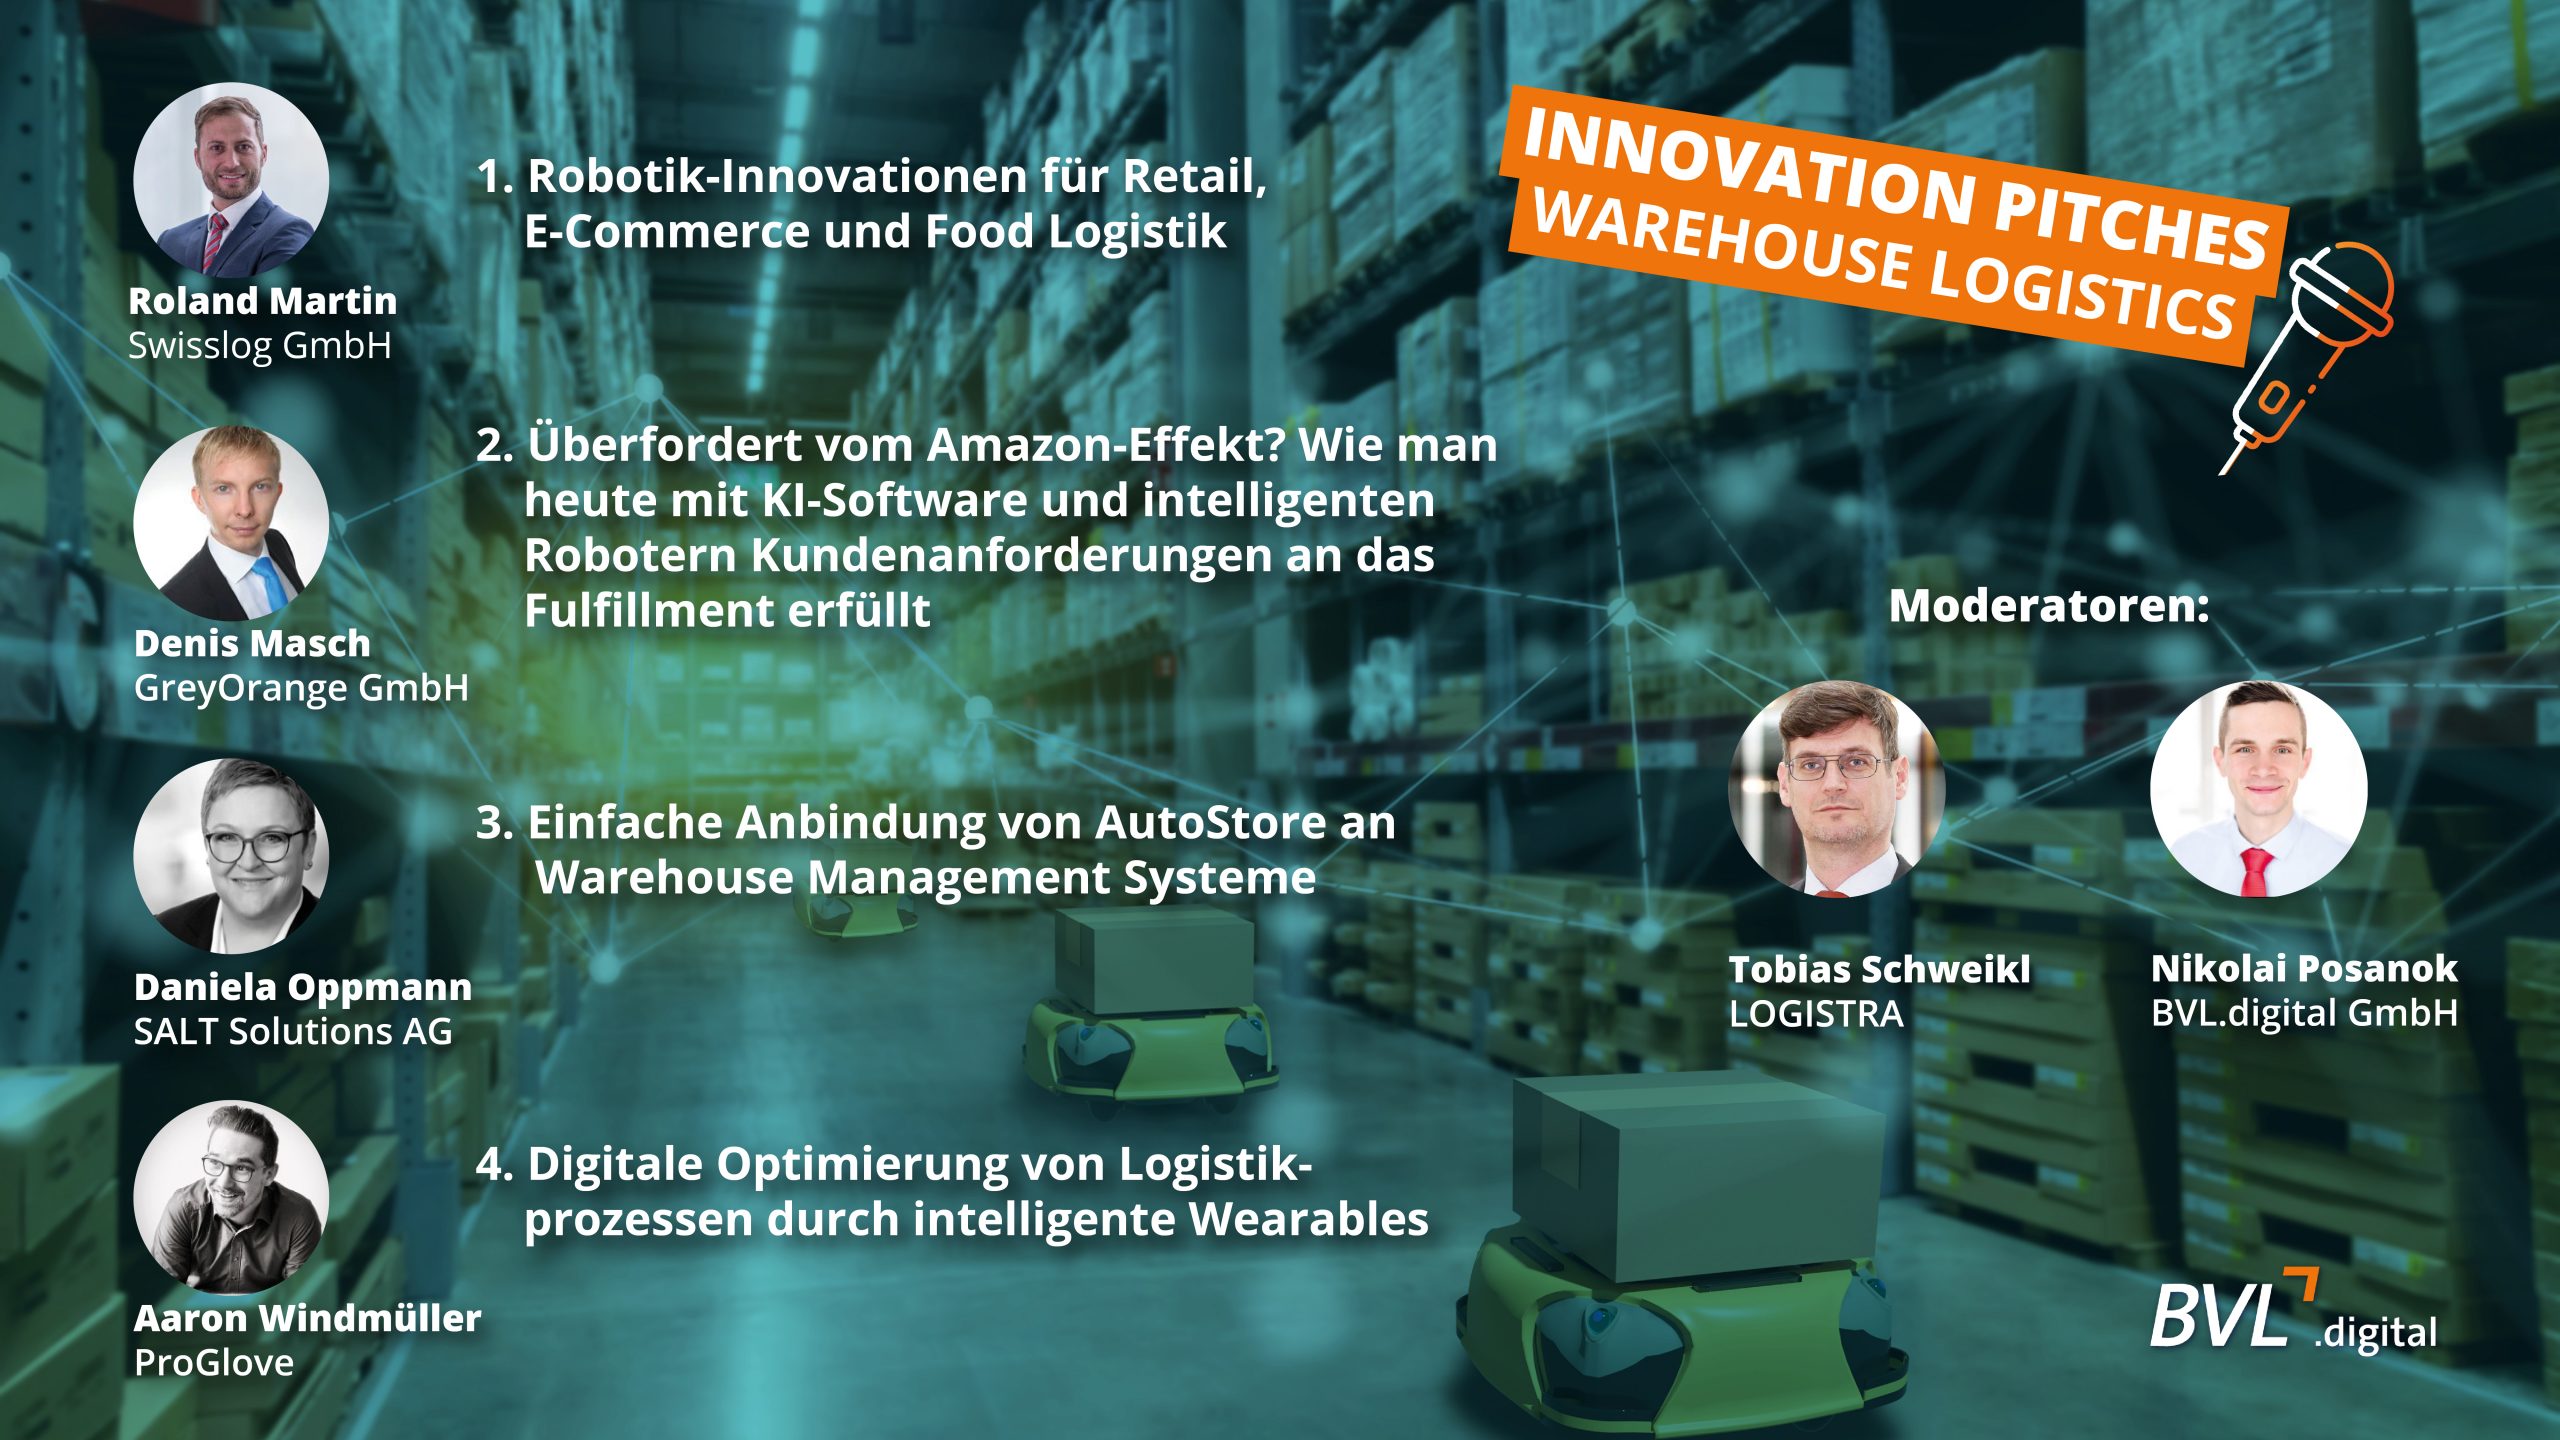 Innovation Pitches - Warehouse Logistics